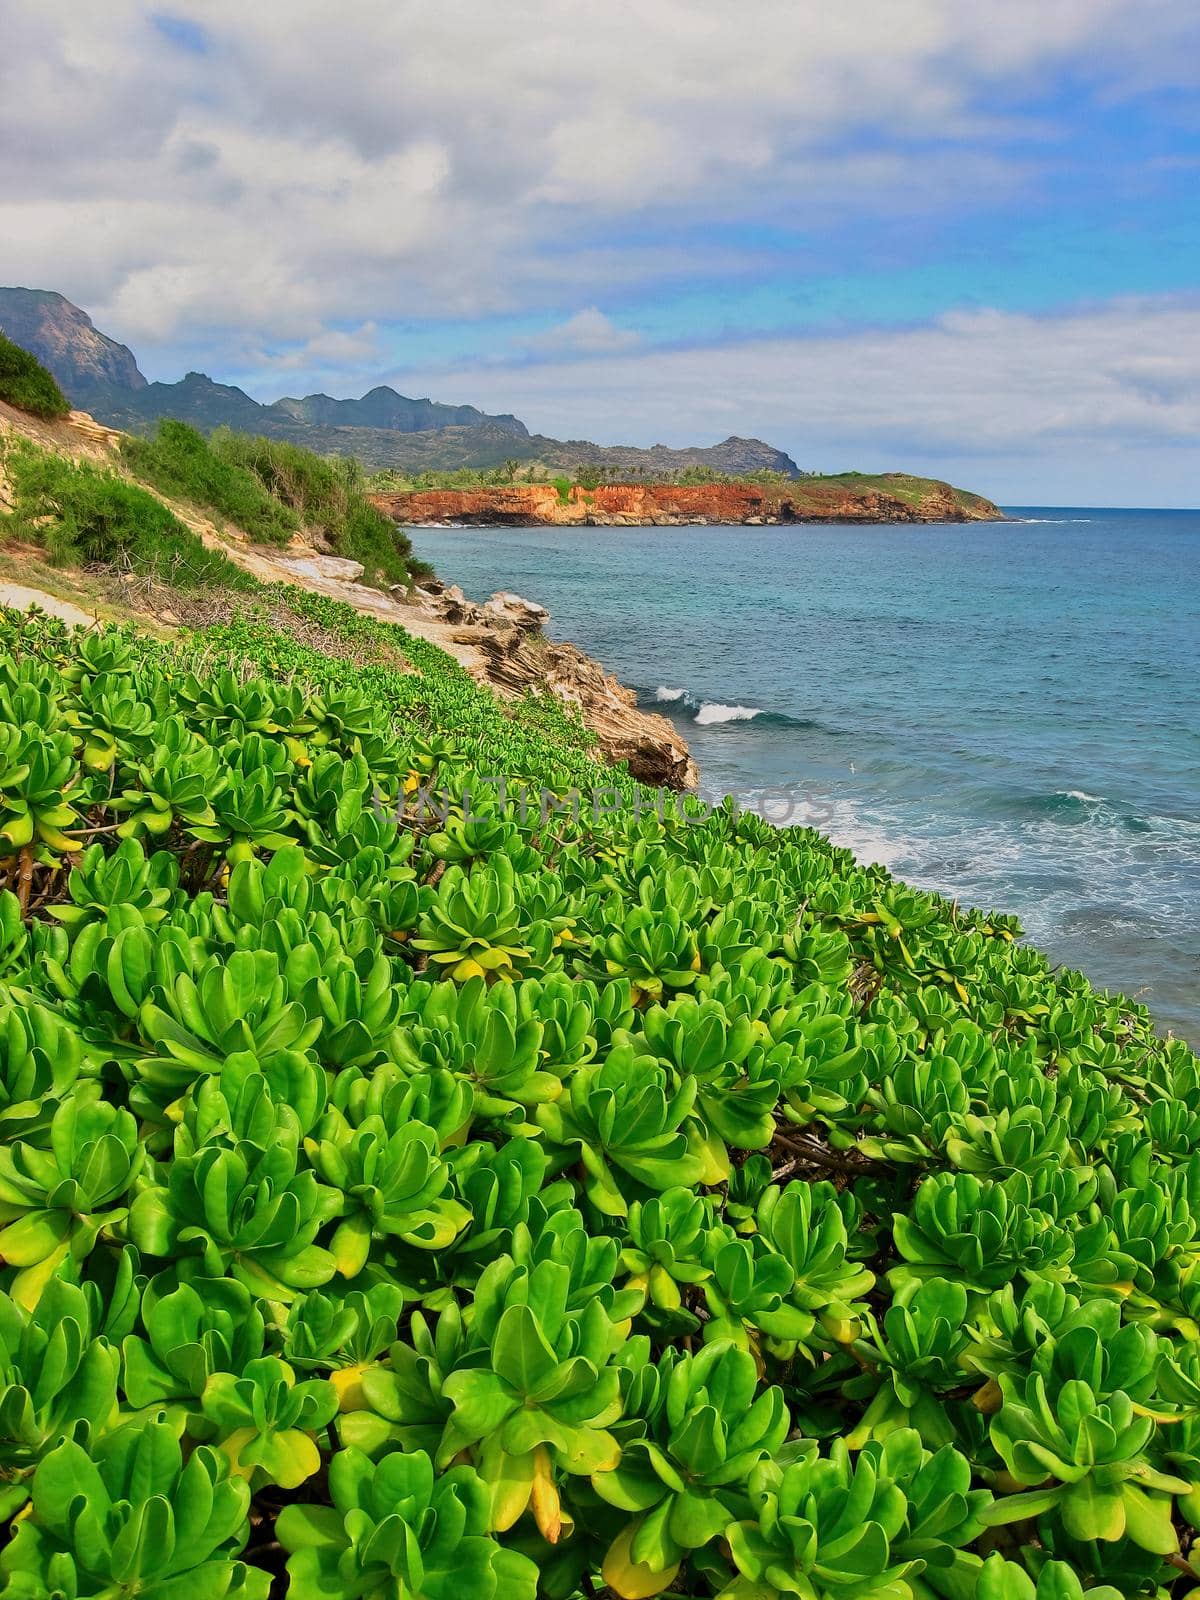 Magnificent Cliff and Ocean Coastline Views along Maha'ulepu Heritage Trail between Shipwrecks Beach and Punahoa Point on Island of Kauai, Hawaii. Naupaka Plants Grow Abundantly in Foreground